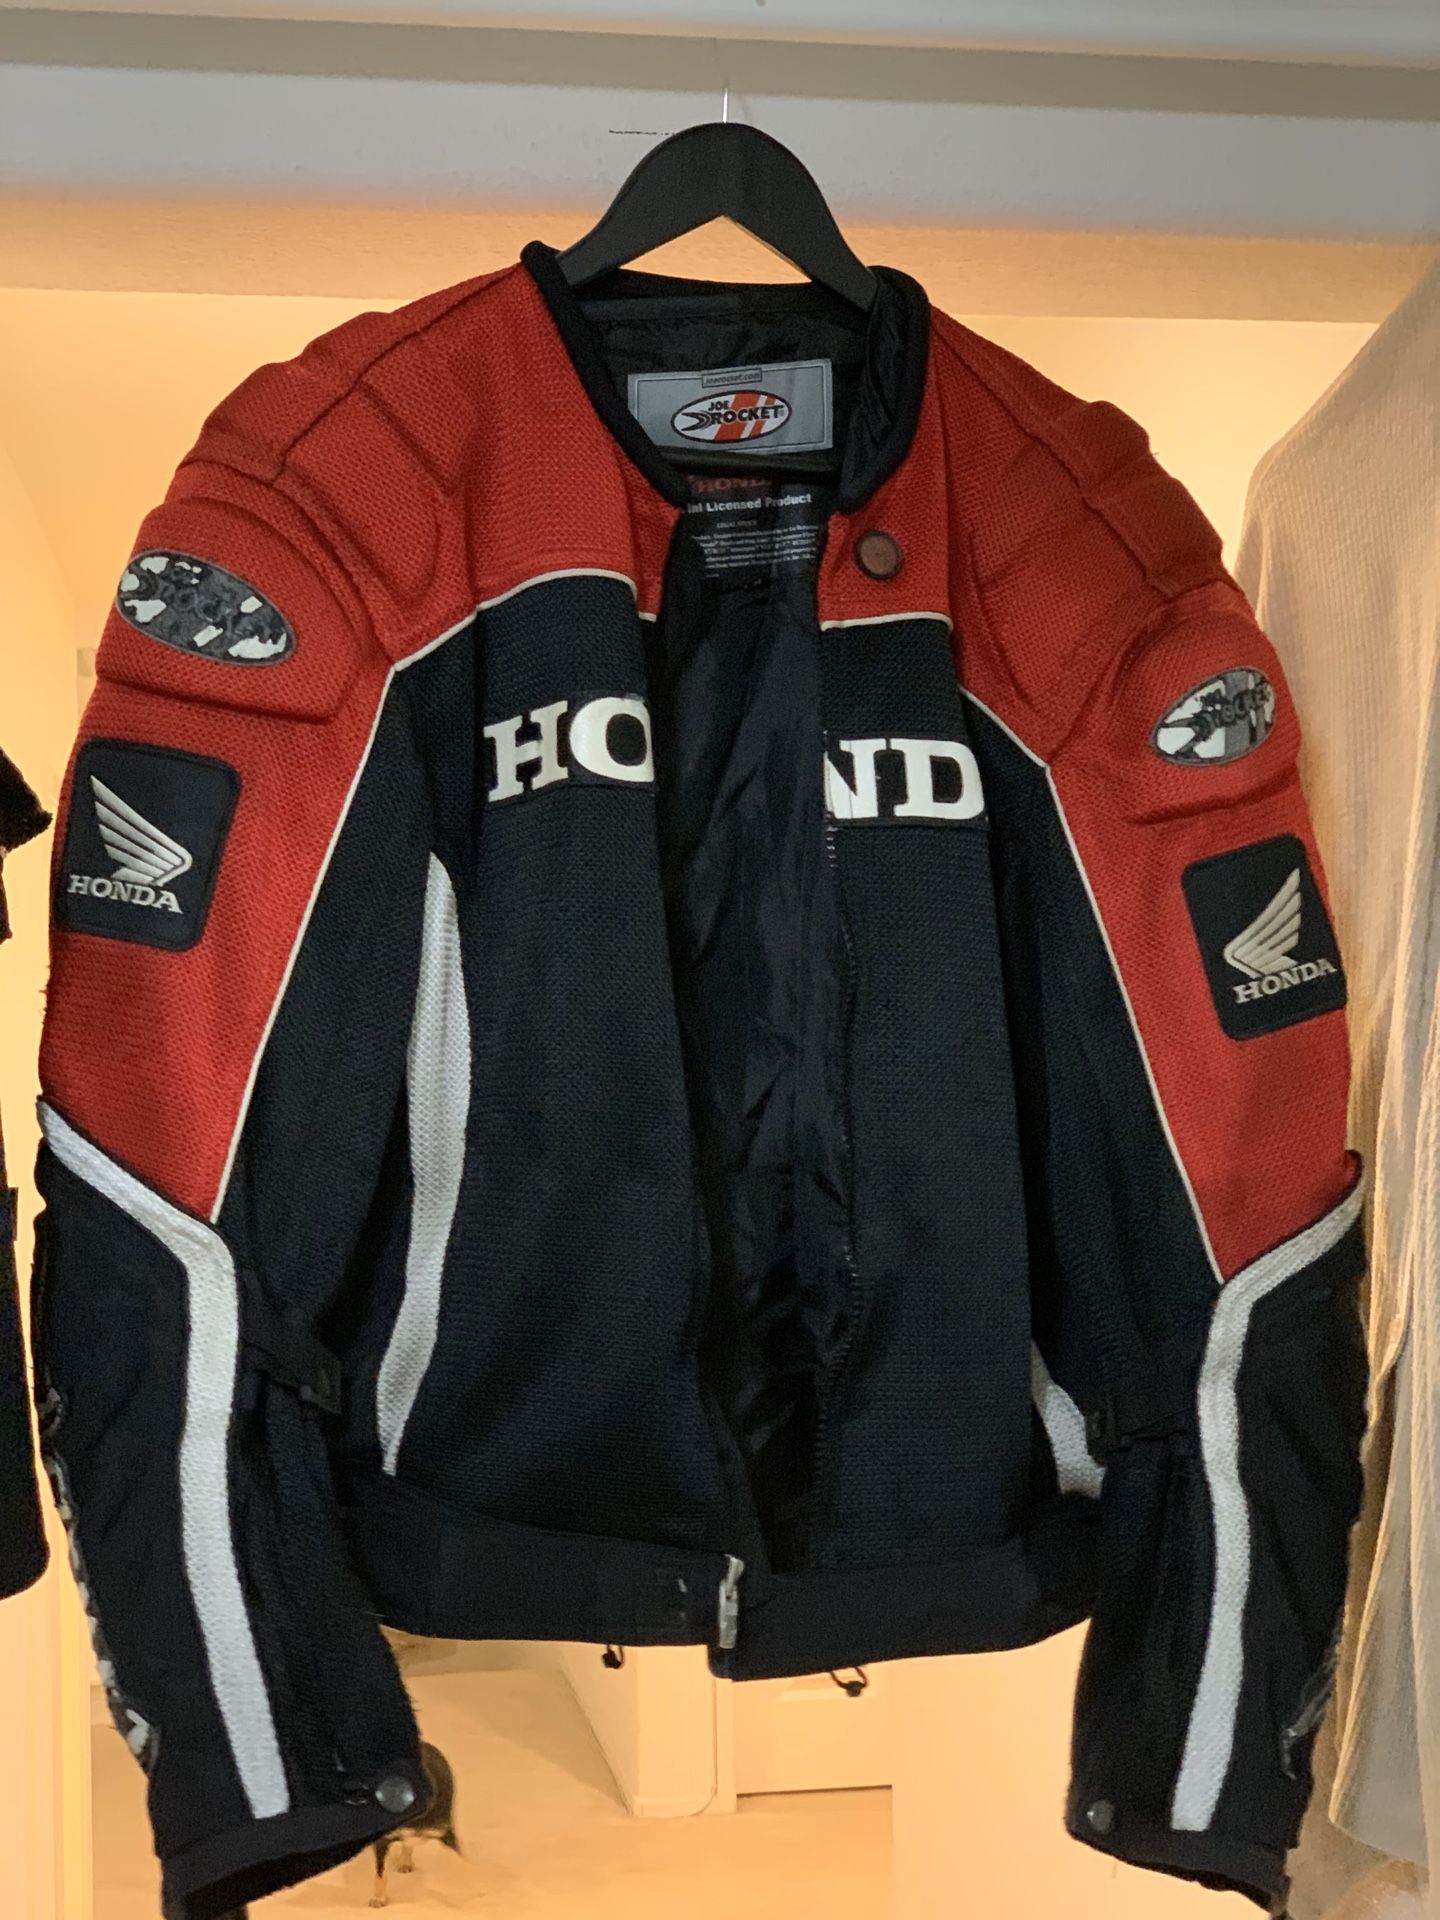 Official Honda Joe Rocket motorcycle jacket size Medium / M